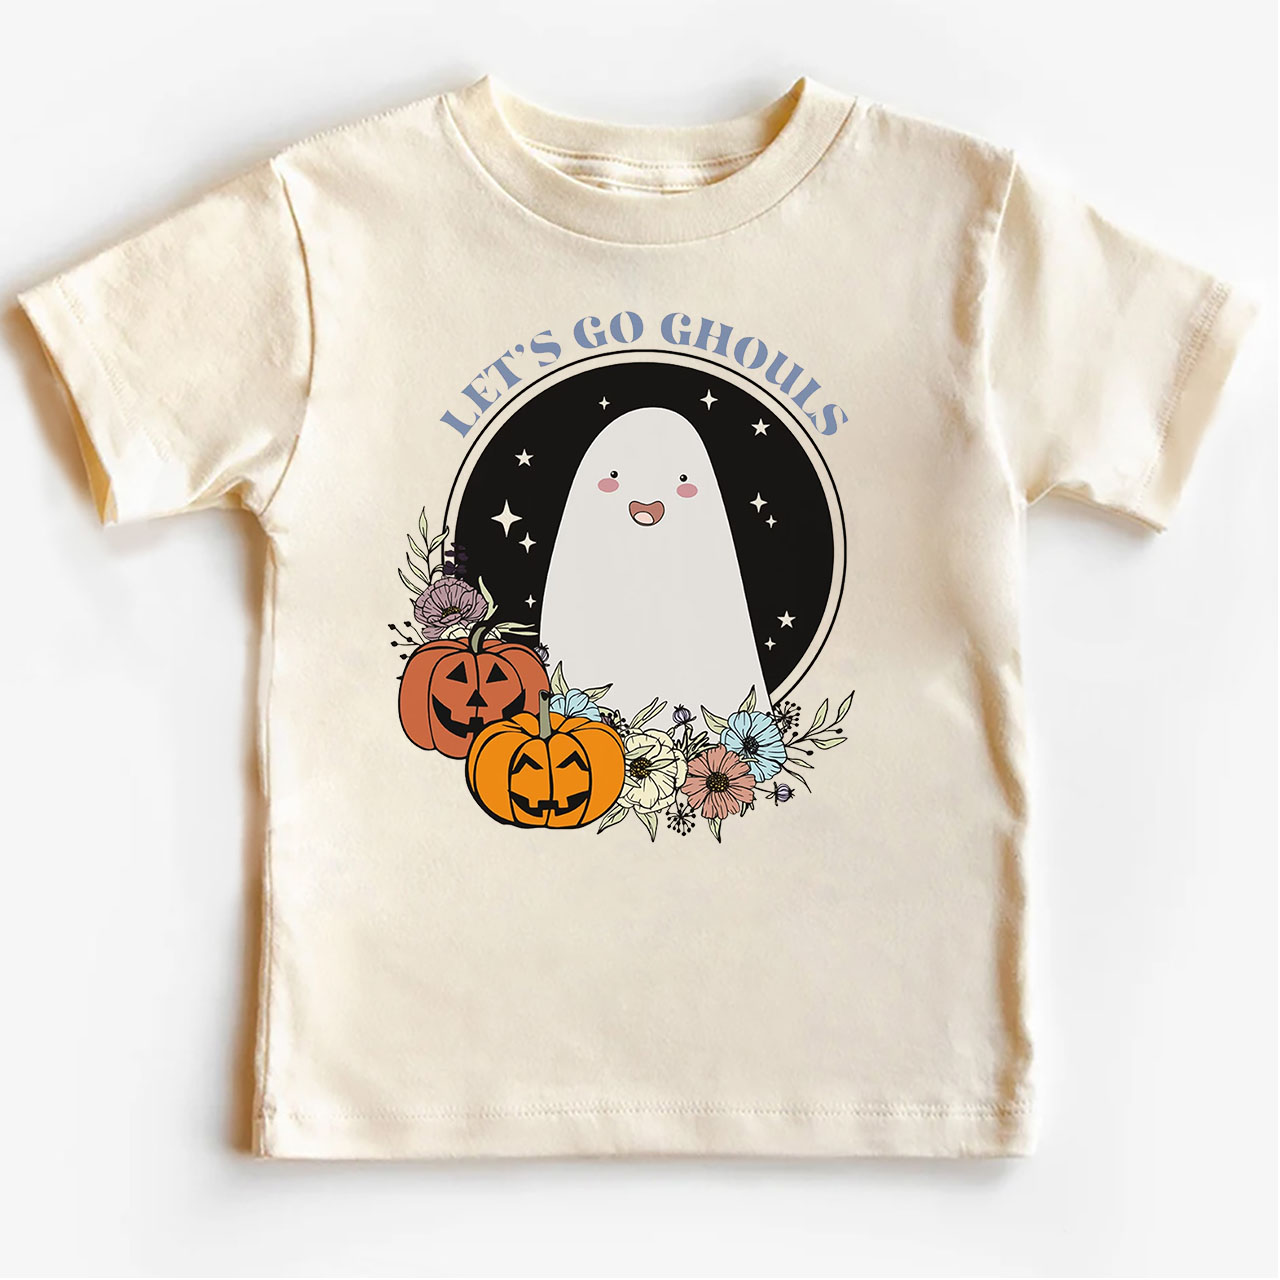 Let's Go Ghouls Halloween Toddler Shirt